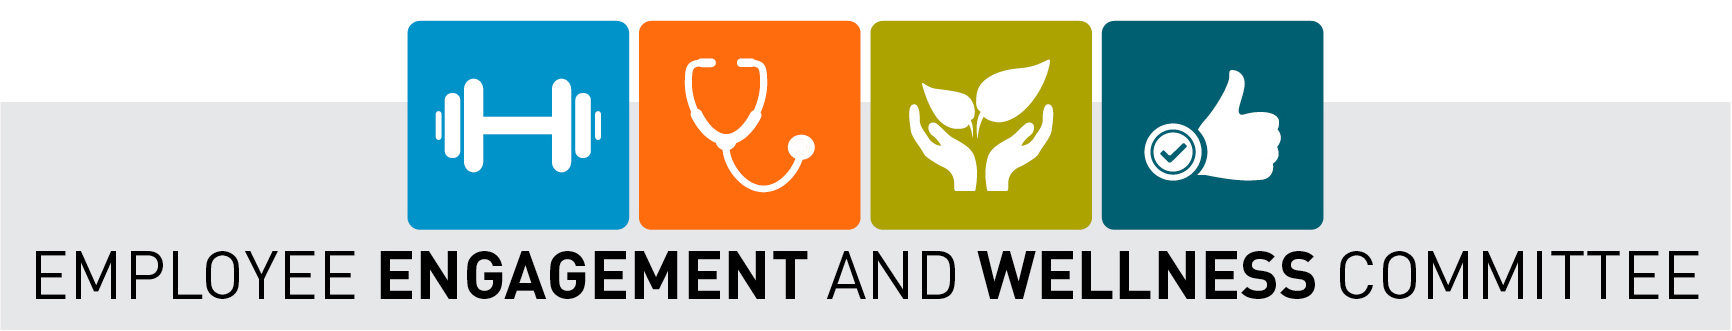 Employee Engagement and Wellness Committee logo